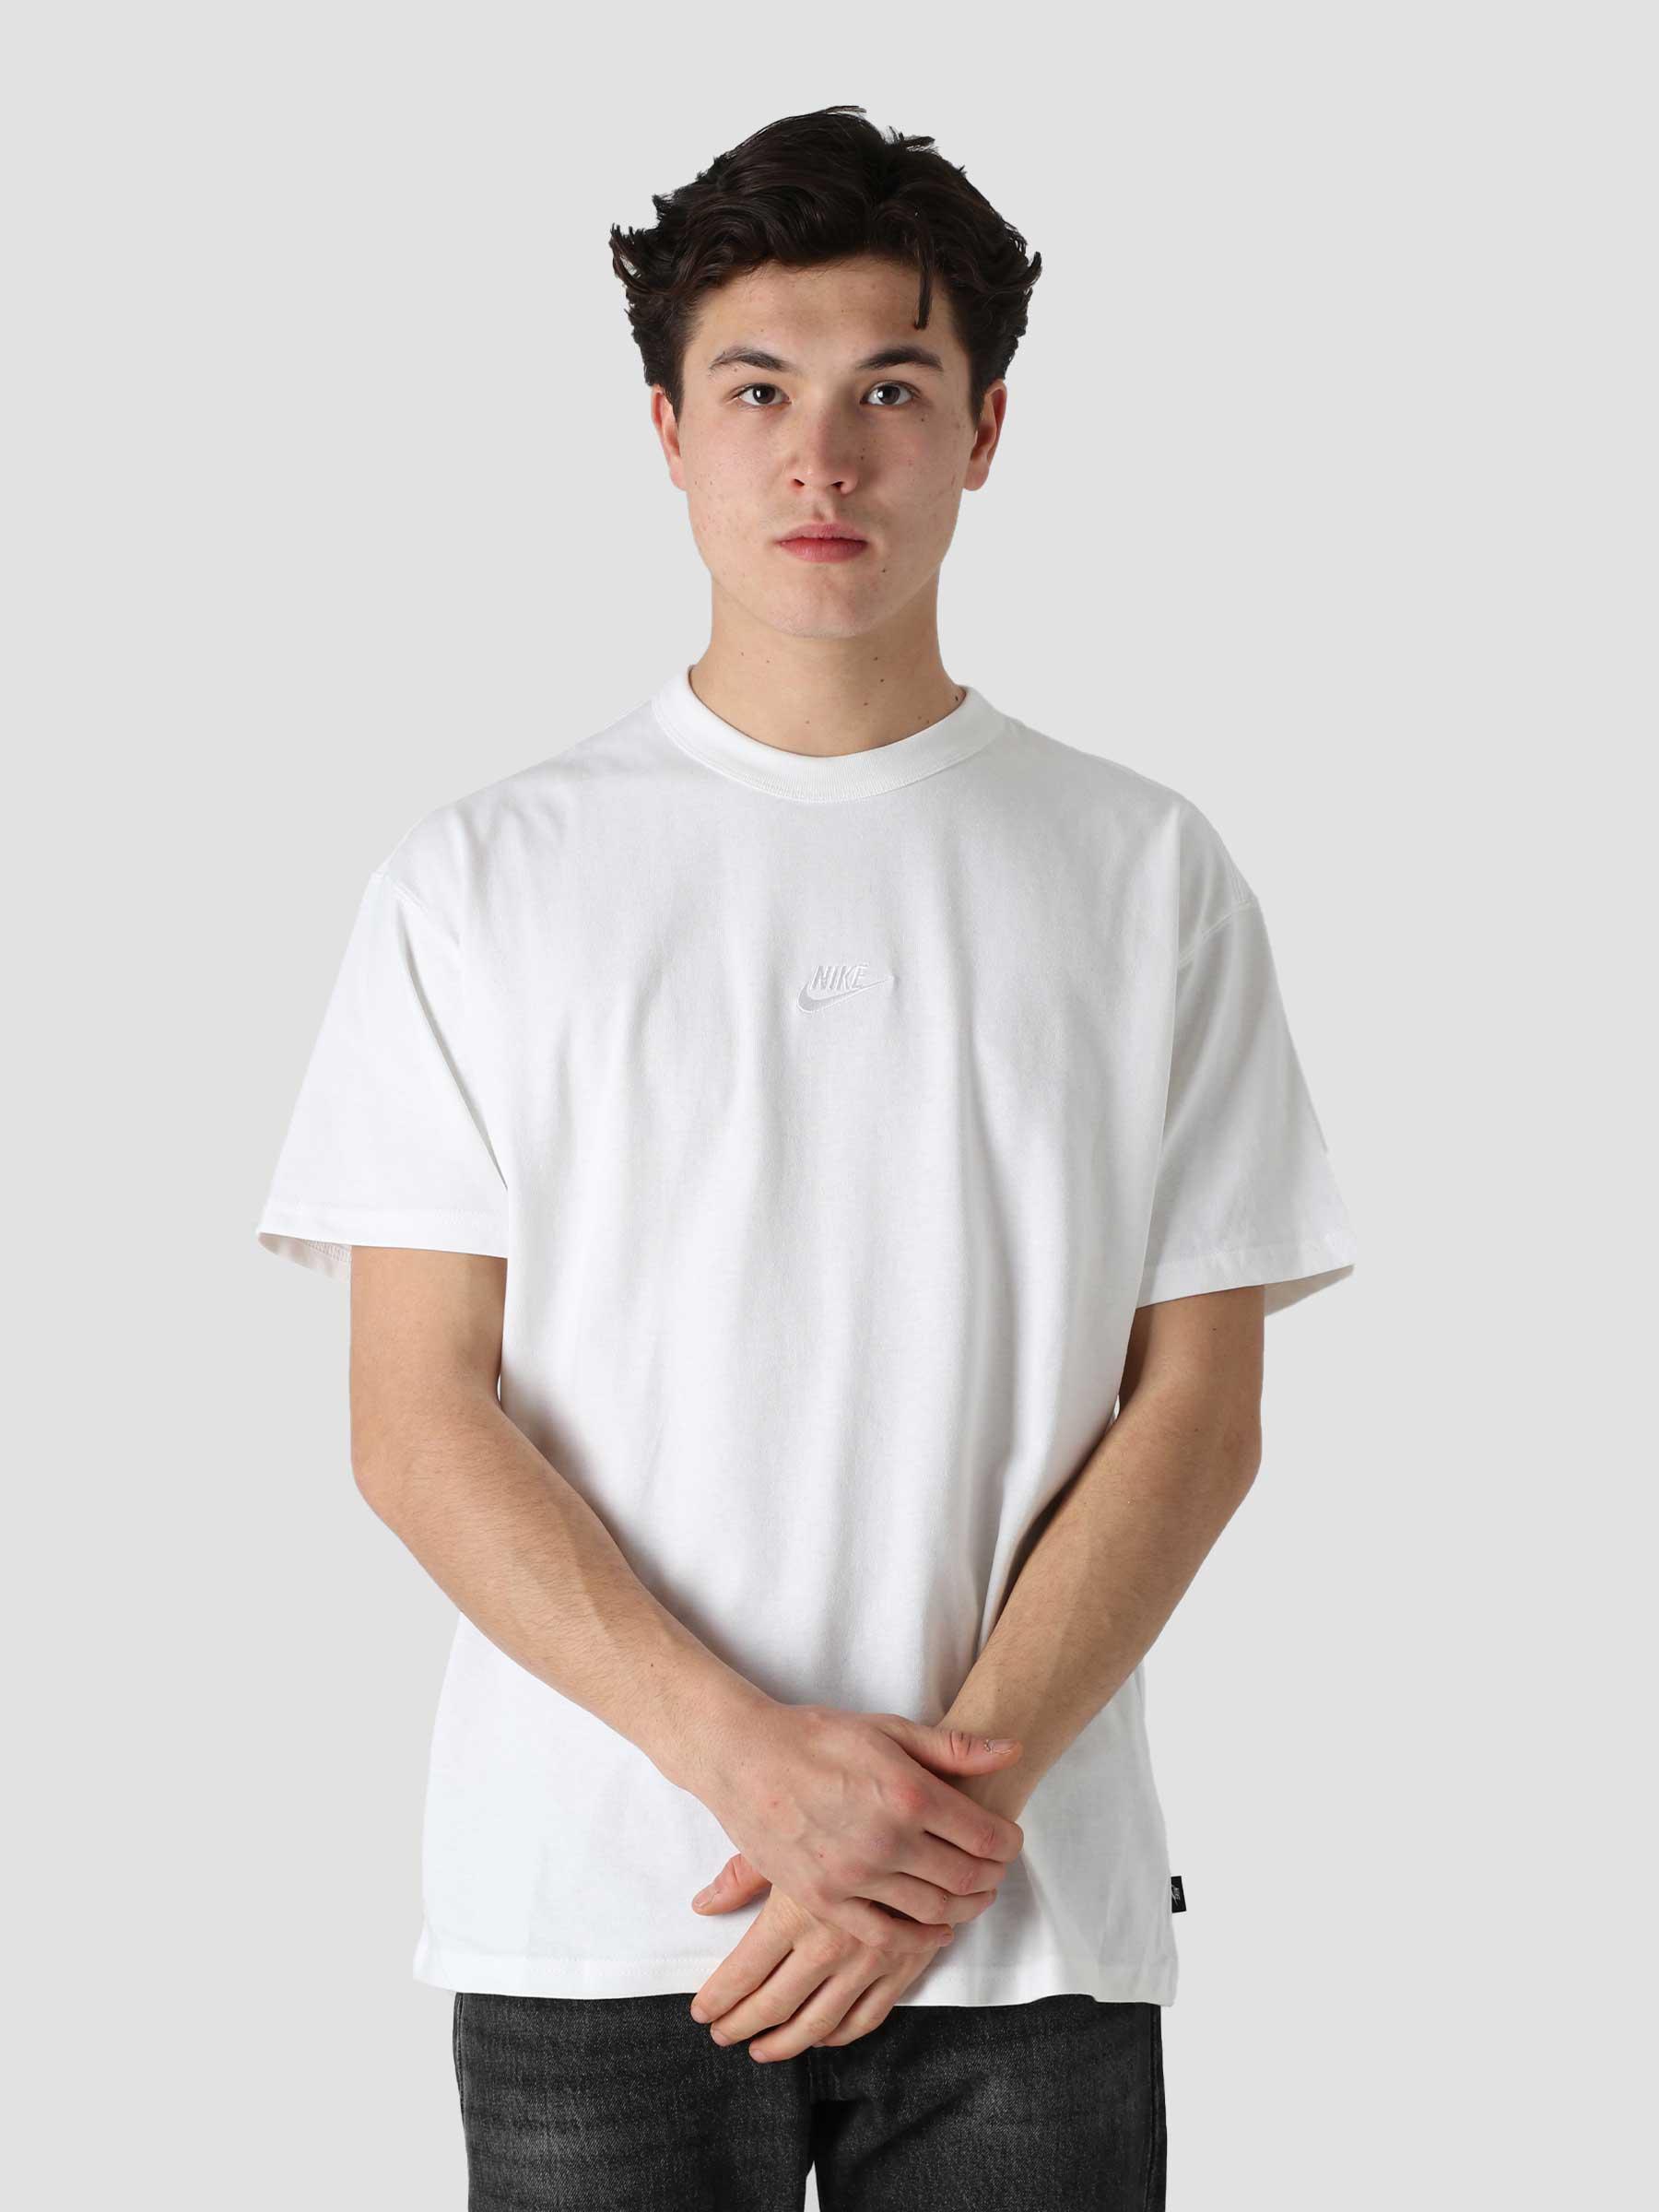 NSW T-Shirt Premium Essential White White DB3193-100